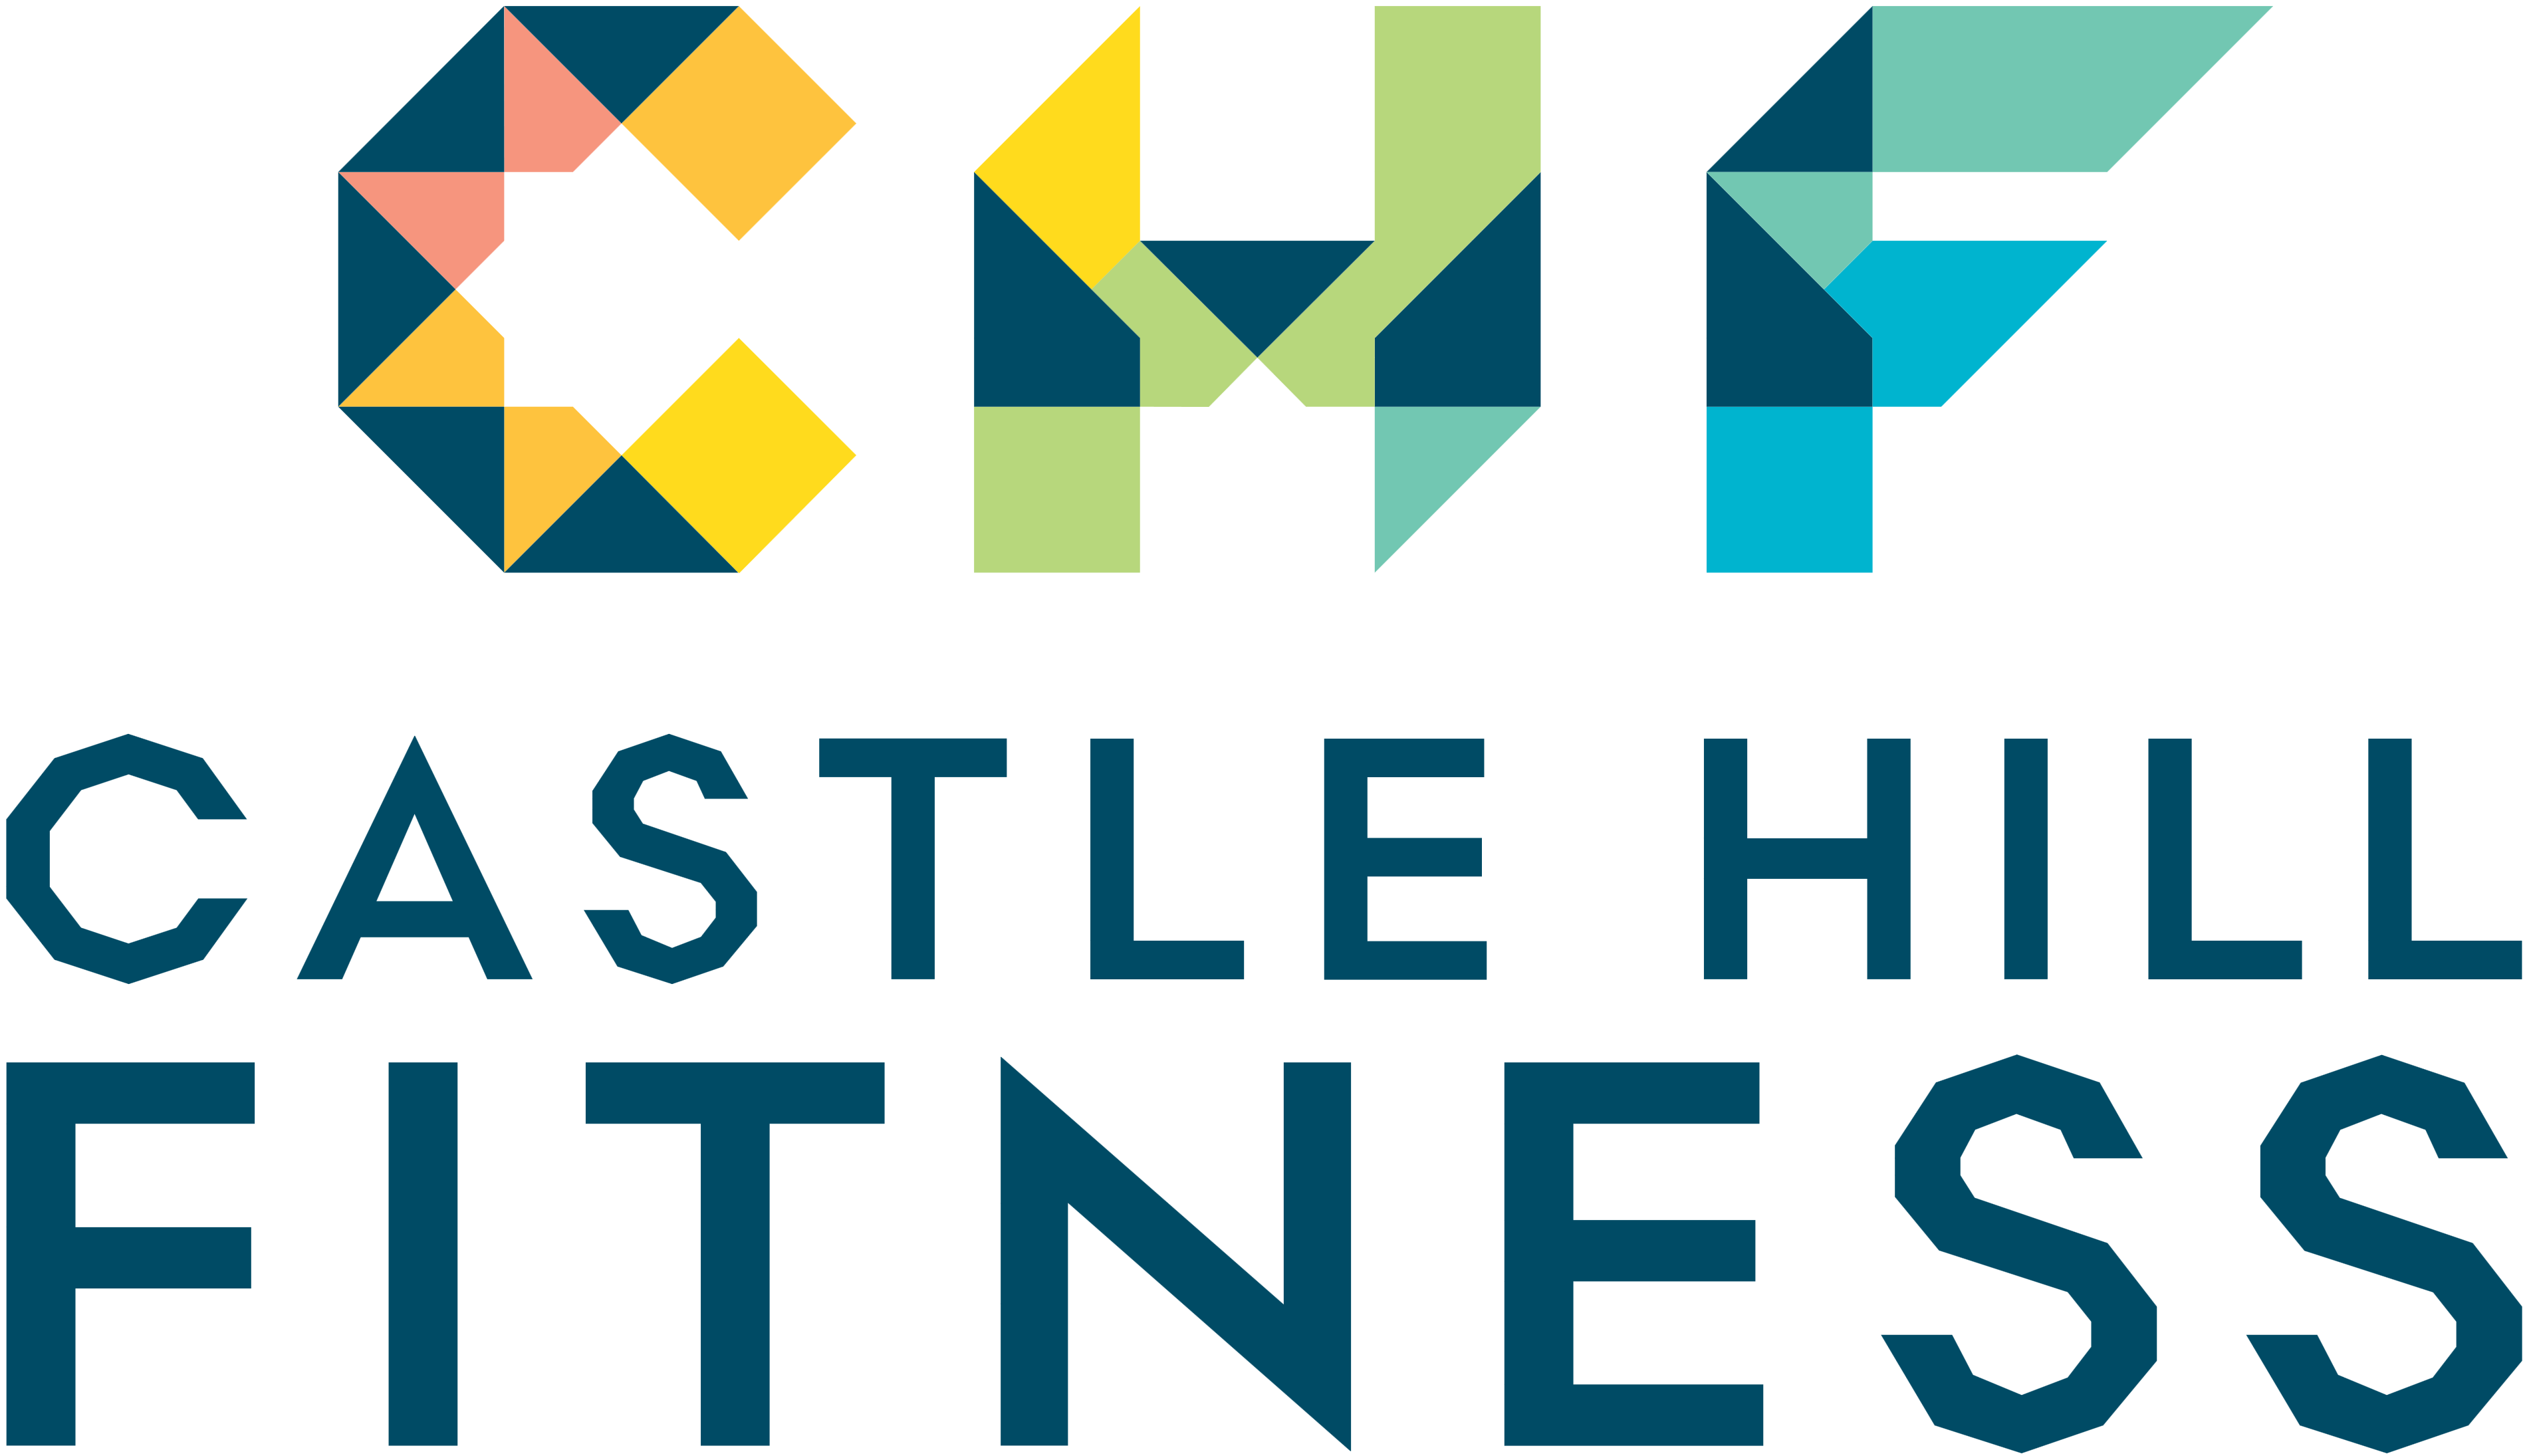 Castle Hill fitness logo, logotype